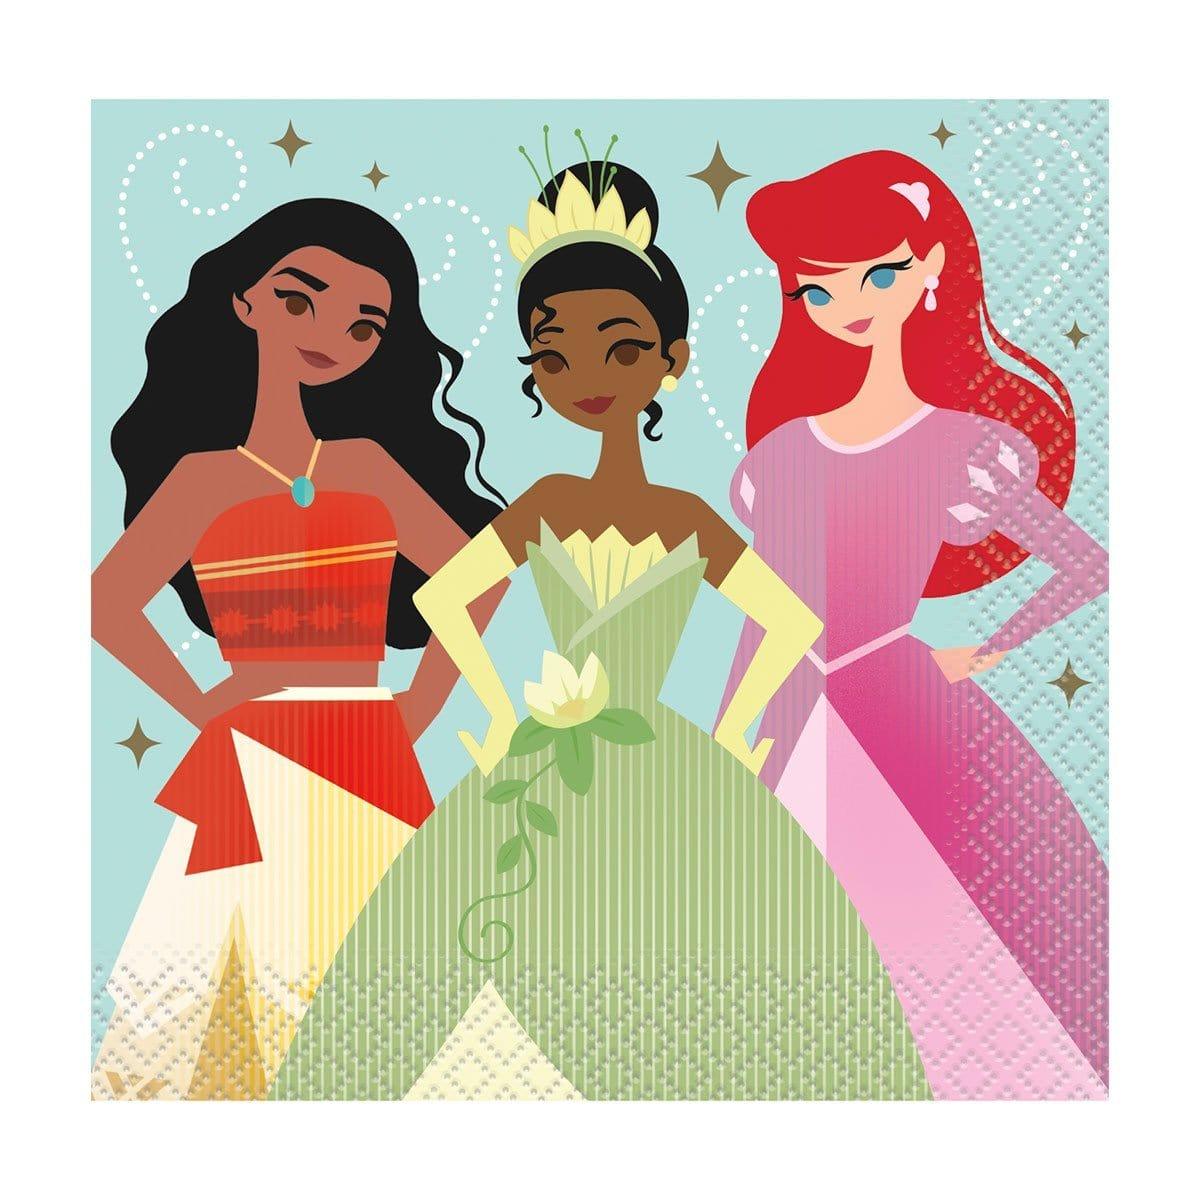 Disney Princess Sticker Sheets – 4 Sheets